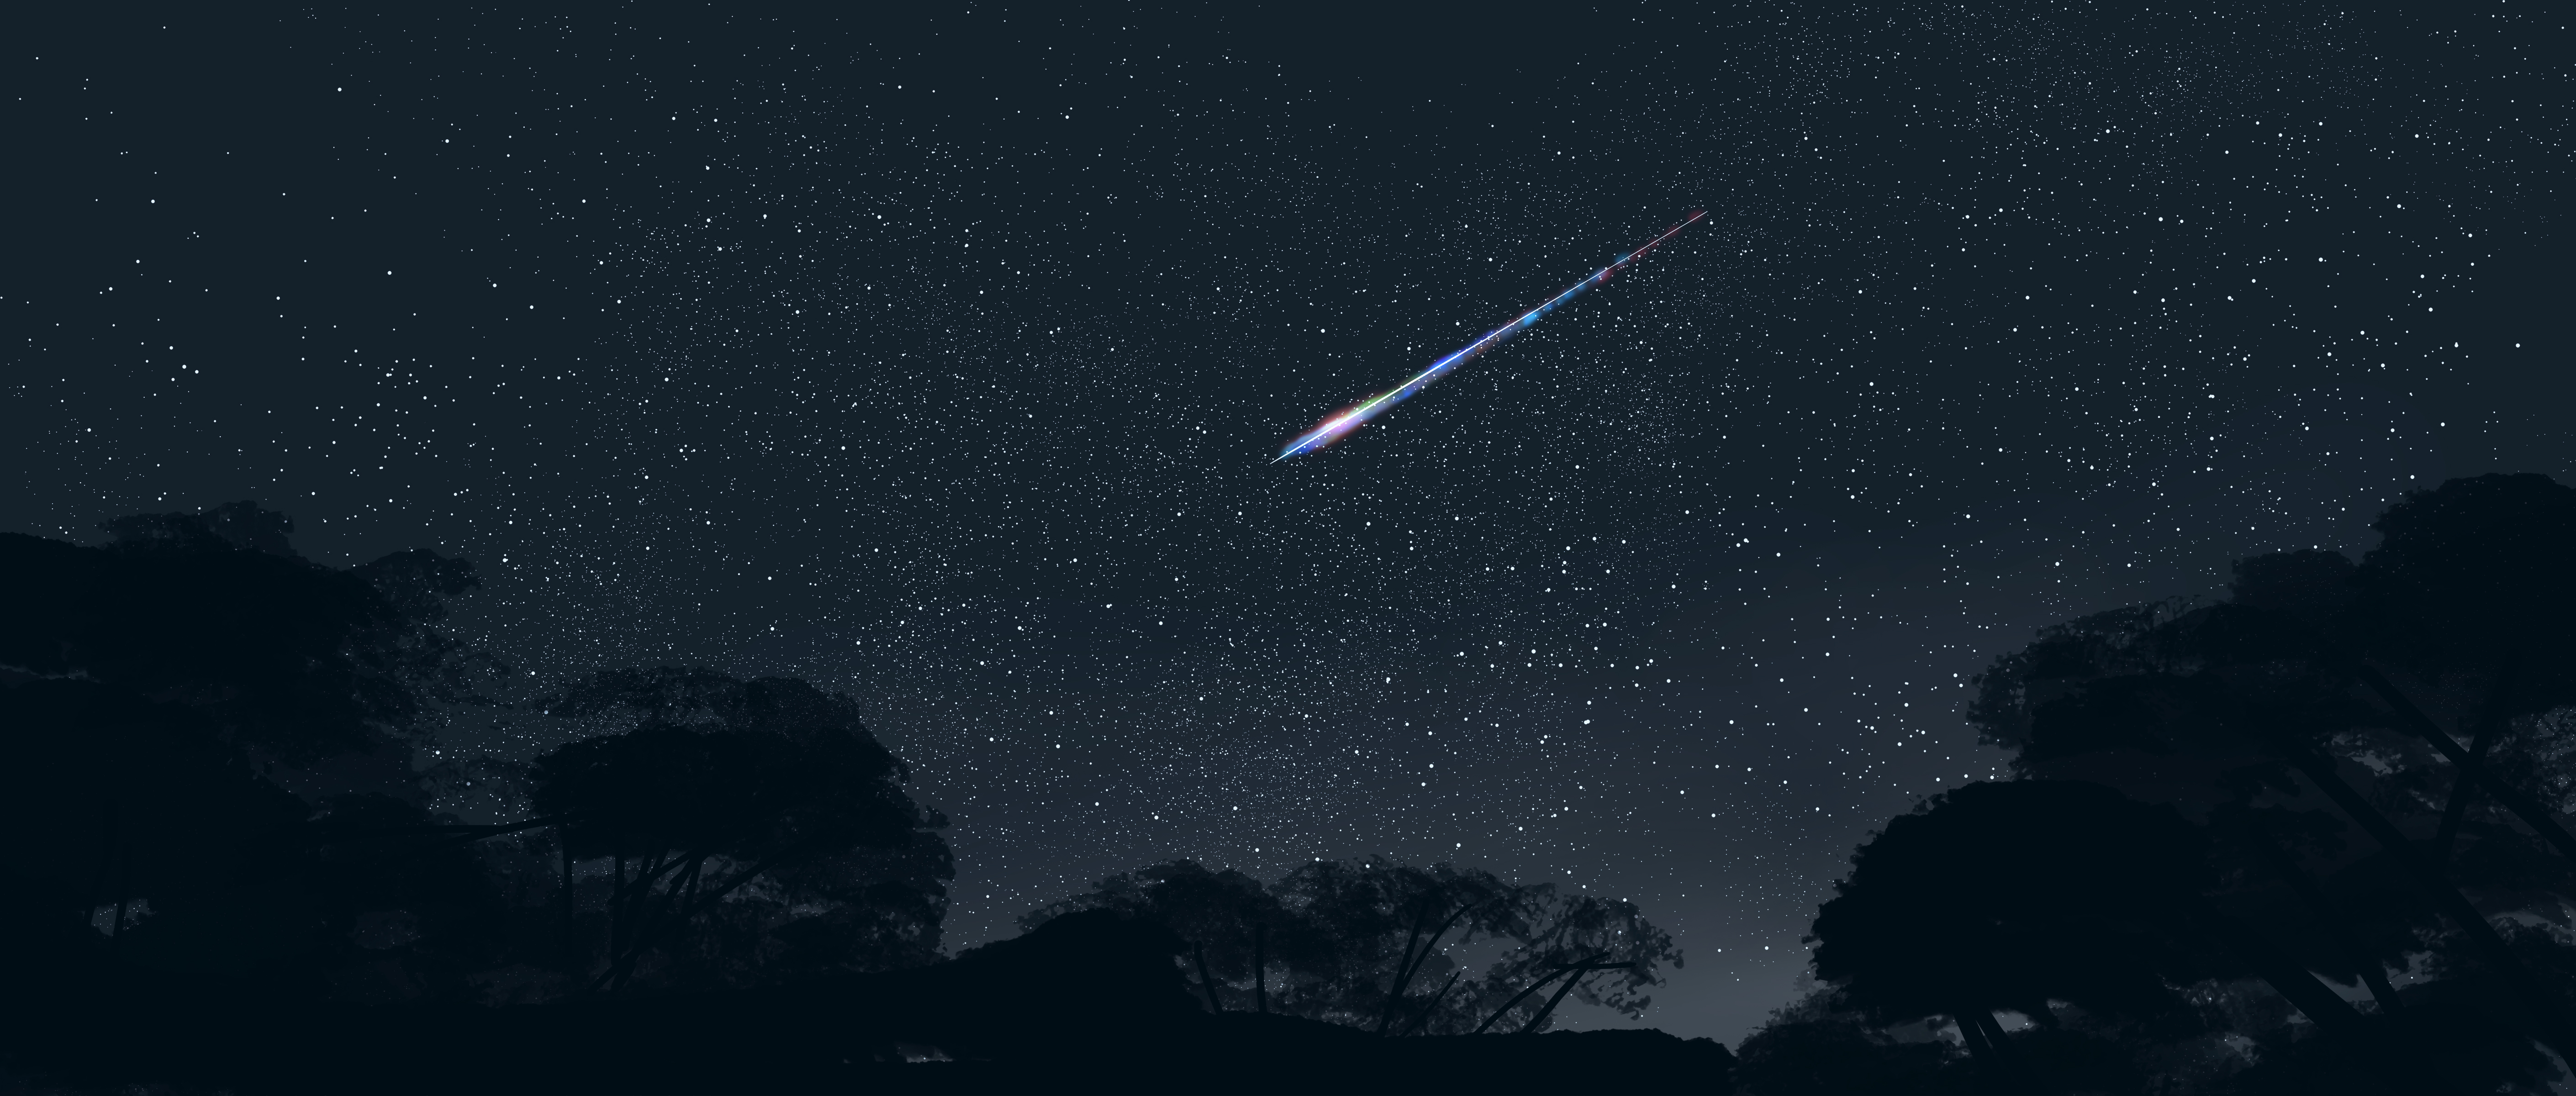 Gracile Digital Art Artwork Illustration Ultrawide Wide Screen Sky Forest Stars Starred Sky Shooting 5640x2400